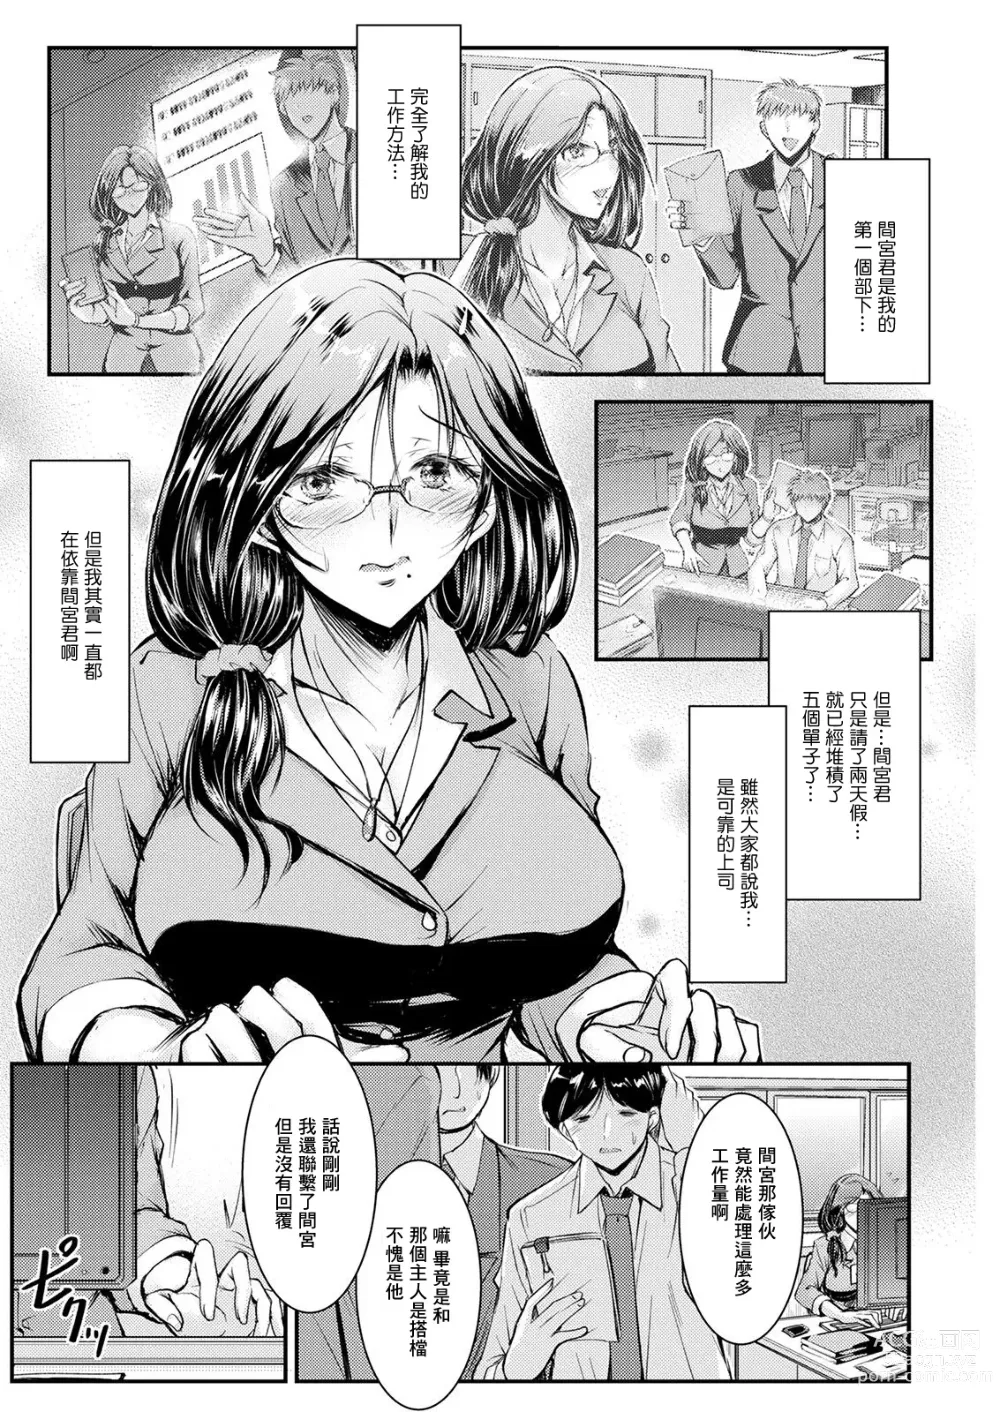 Page 2 of manga Shunin wa Dekiru Joushi